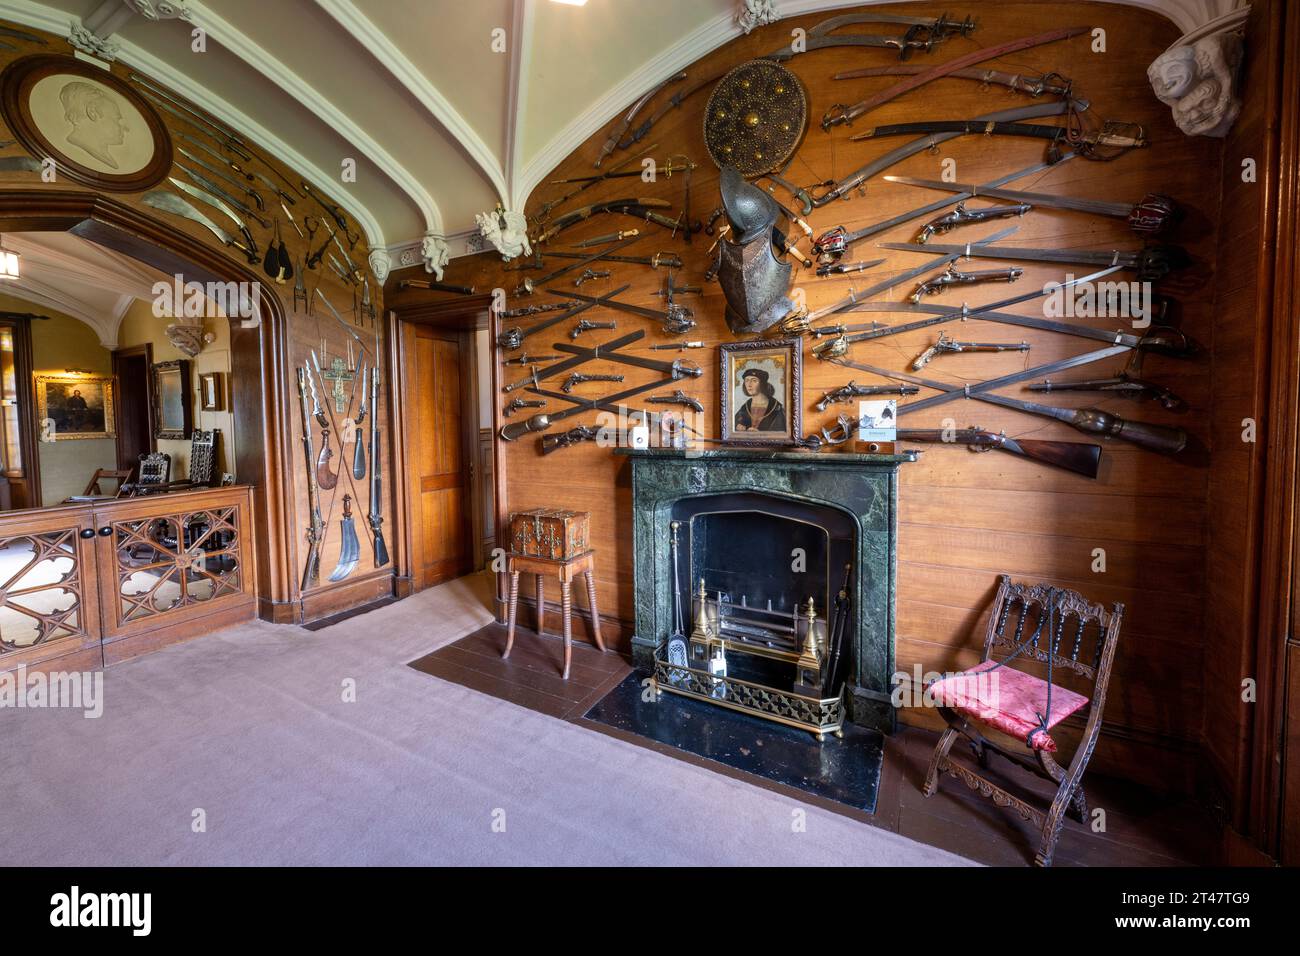 Abbotsford House, Abbotsford, Melrose, Roxburghshire, Scotland, UK - home of Sir Walter Scott - interior view Stock Photo